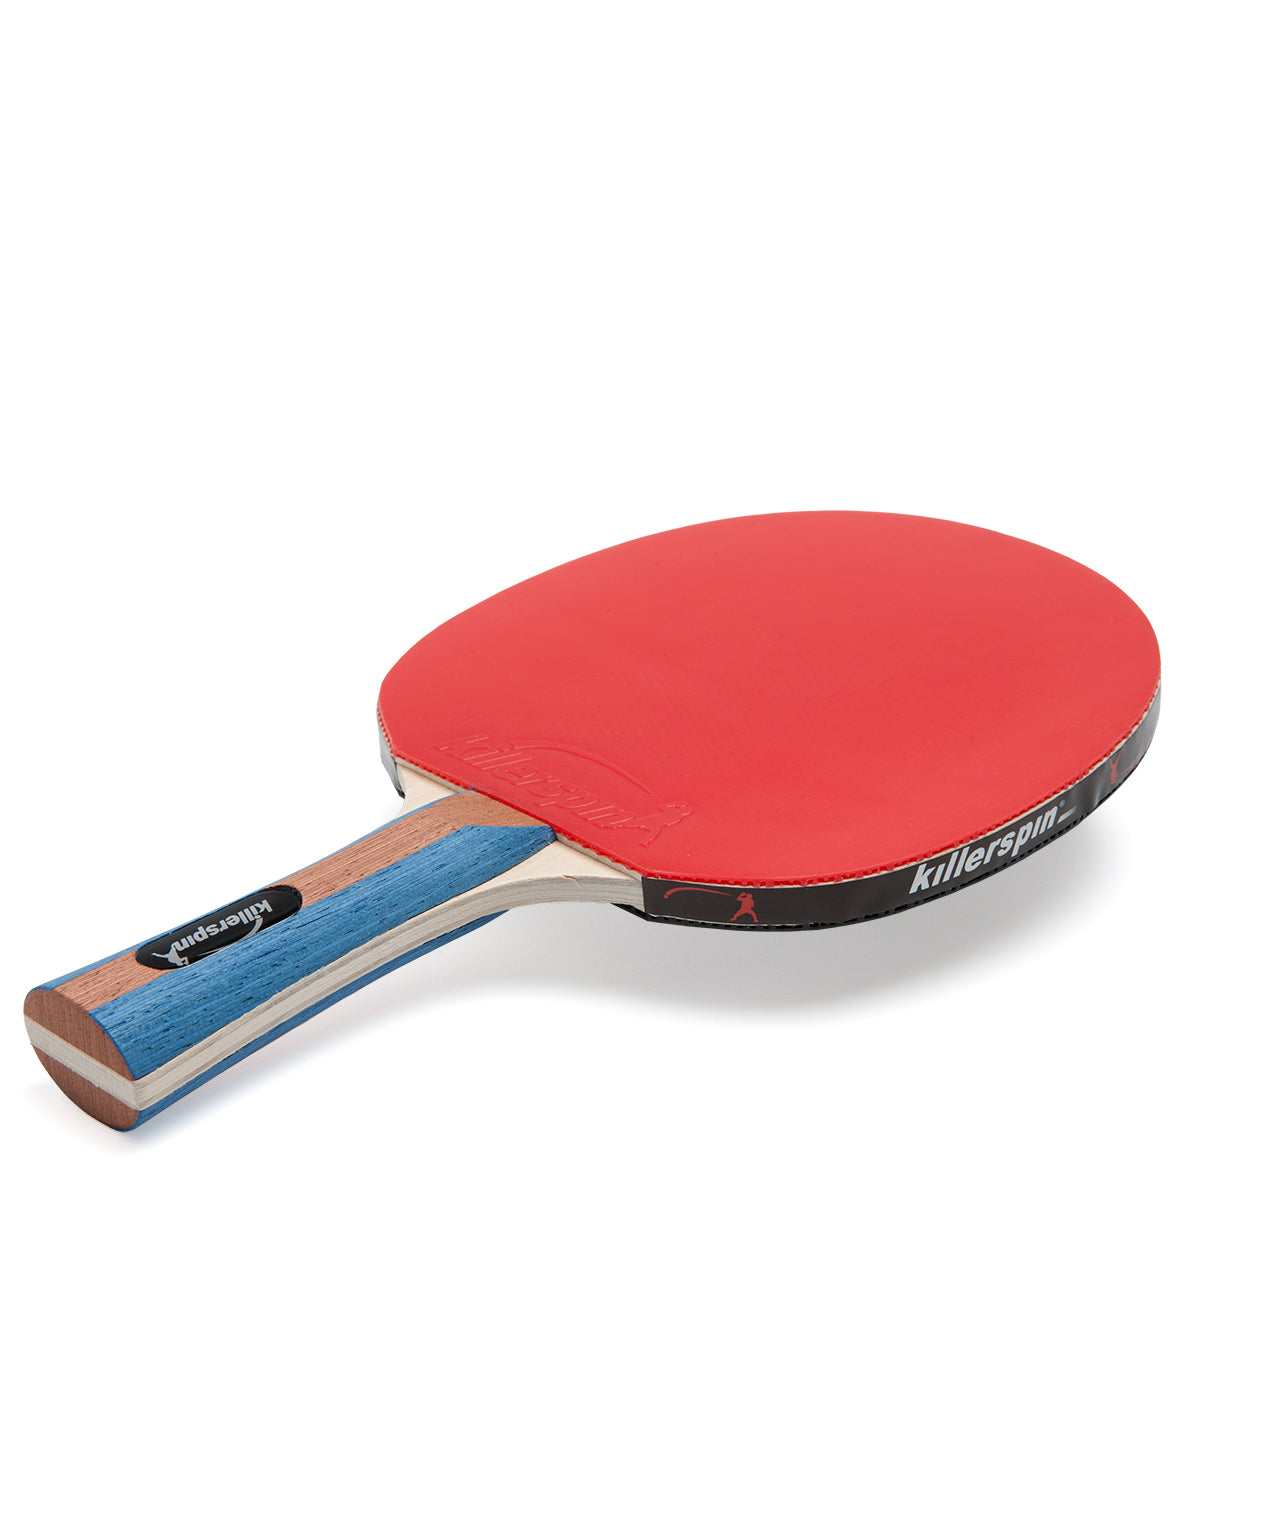 Killerspin Ping Pong Paddle Set JetSet4 - Red Rubber